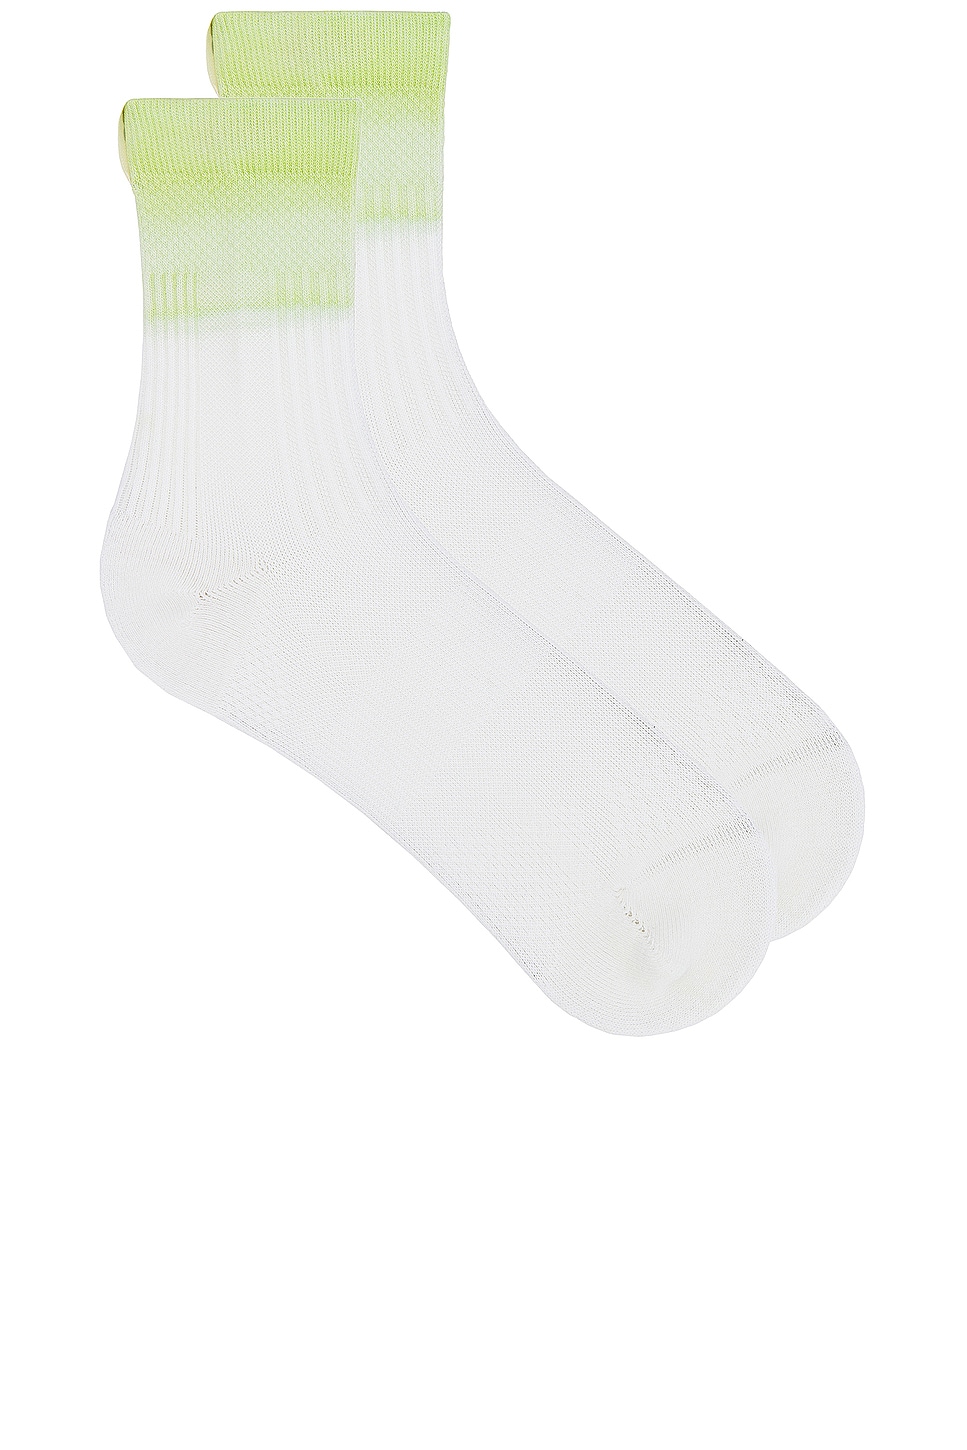 All-Day Sock in White